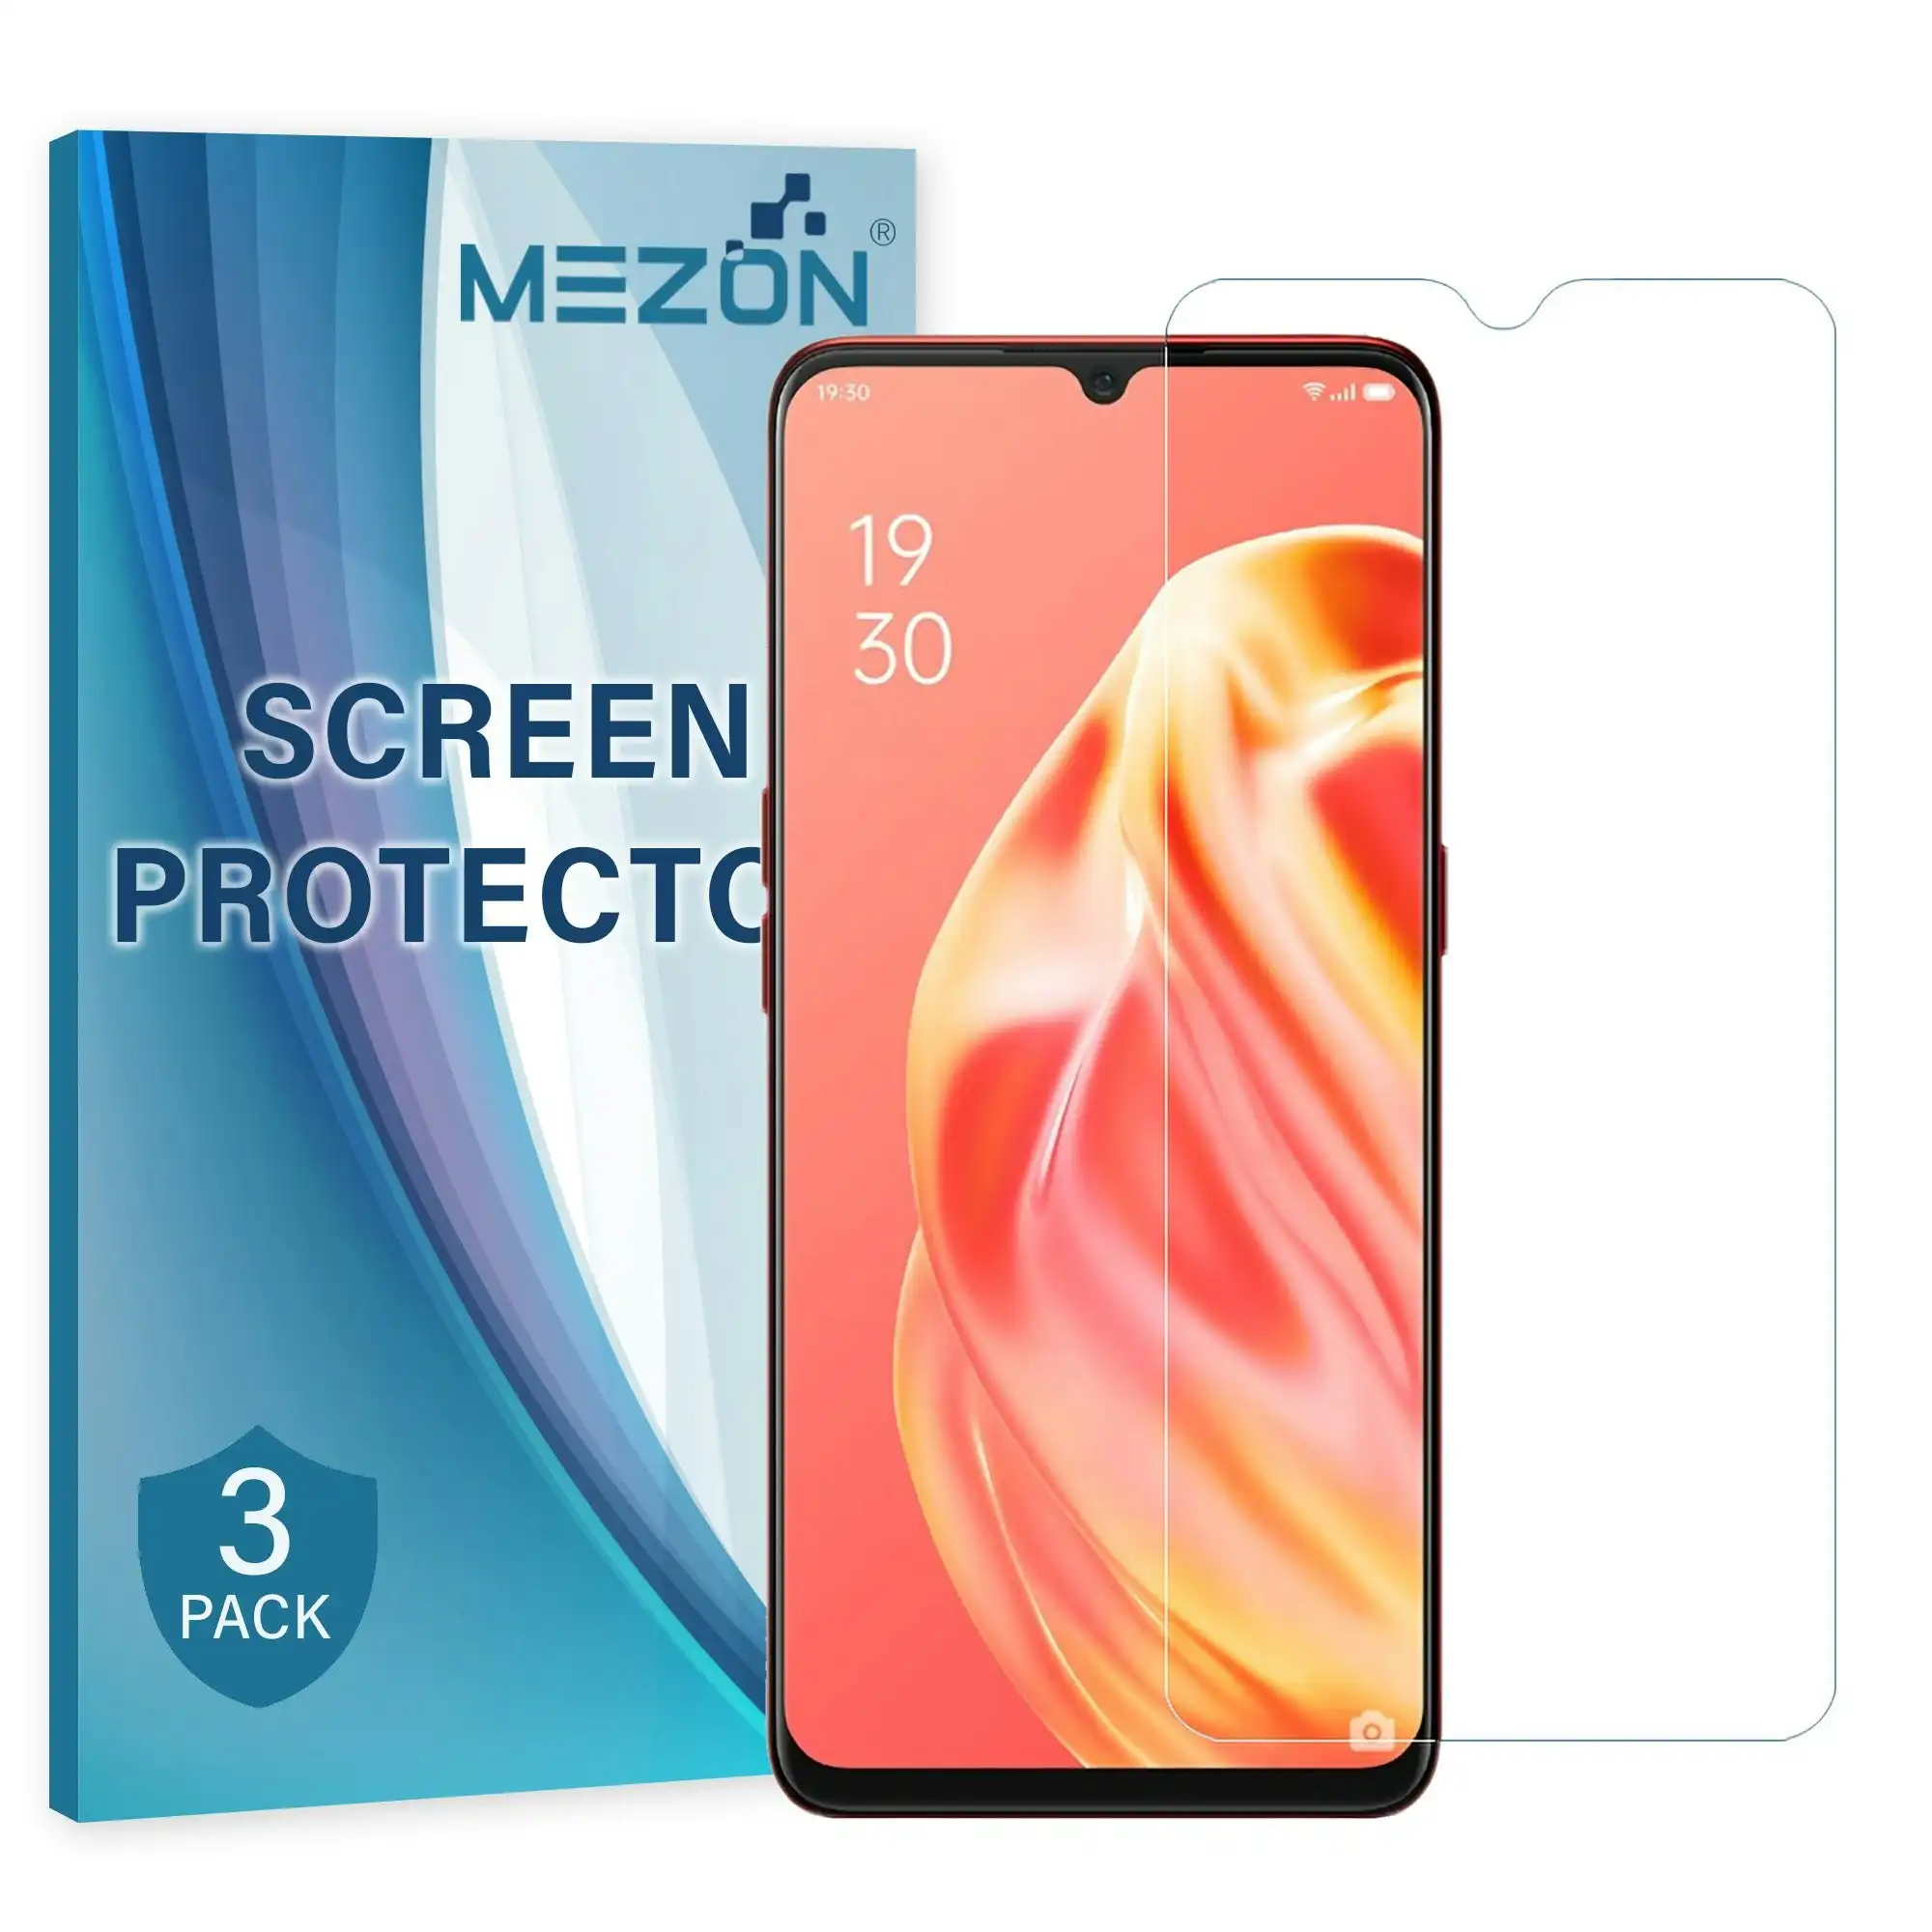 [3 Pack] MEZON Vivo X50 Lite Anti-Glare Matte Screen Protector Case Friendly Film (Vivo X50 Lite, Matte)